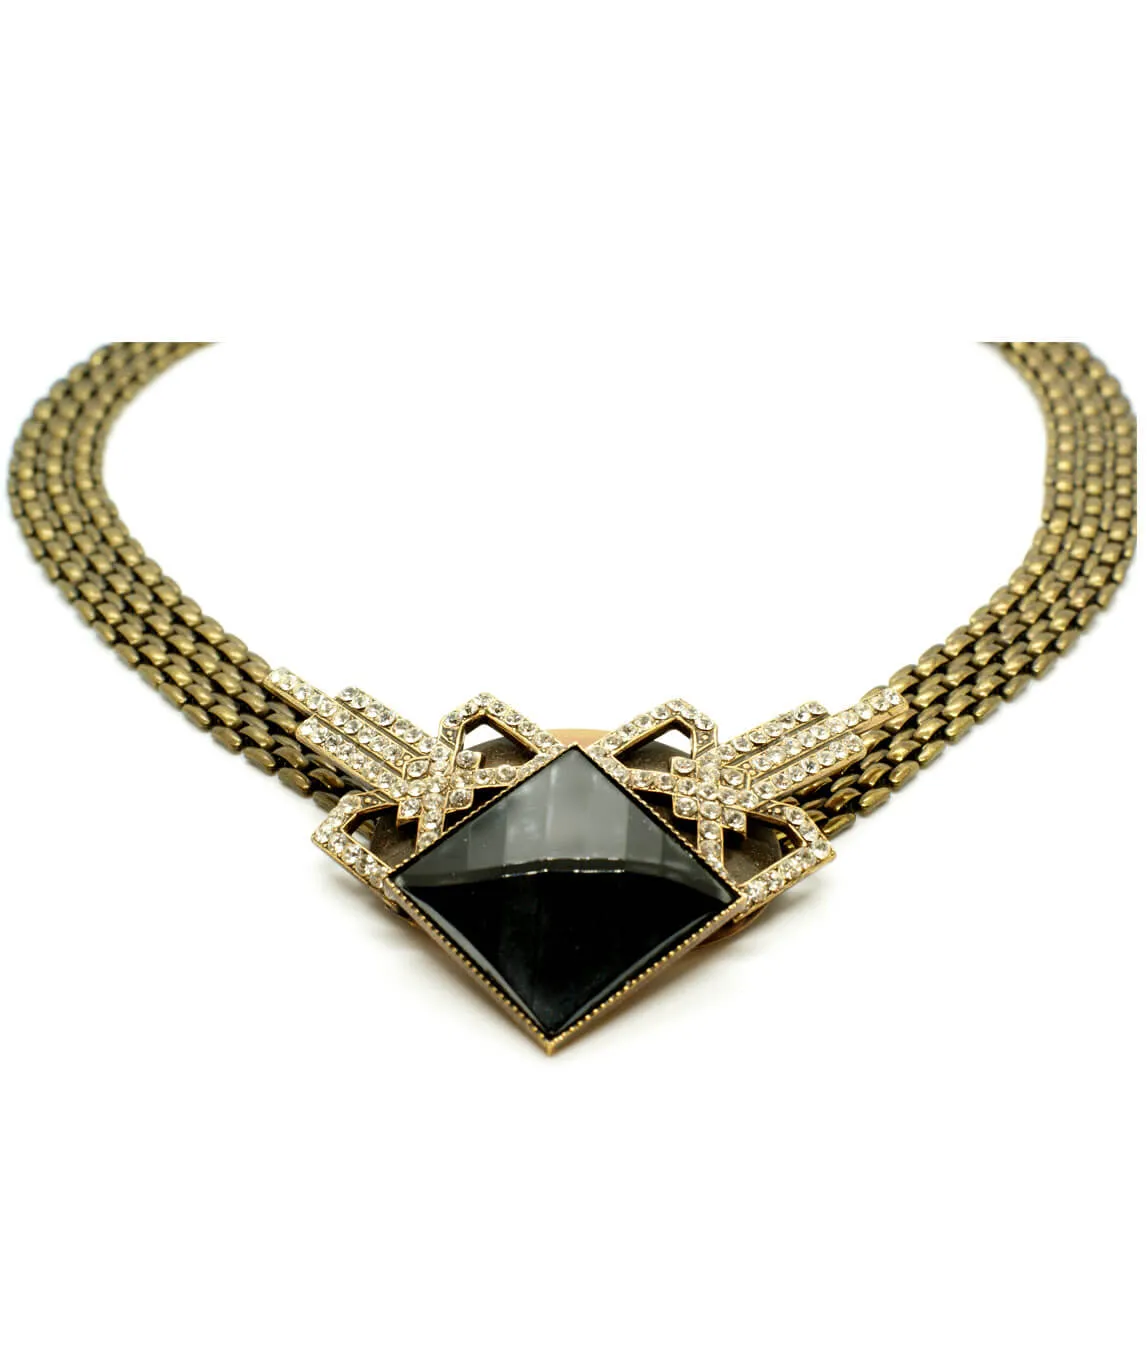 Ermani Bulatti art deco style necklace